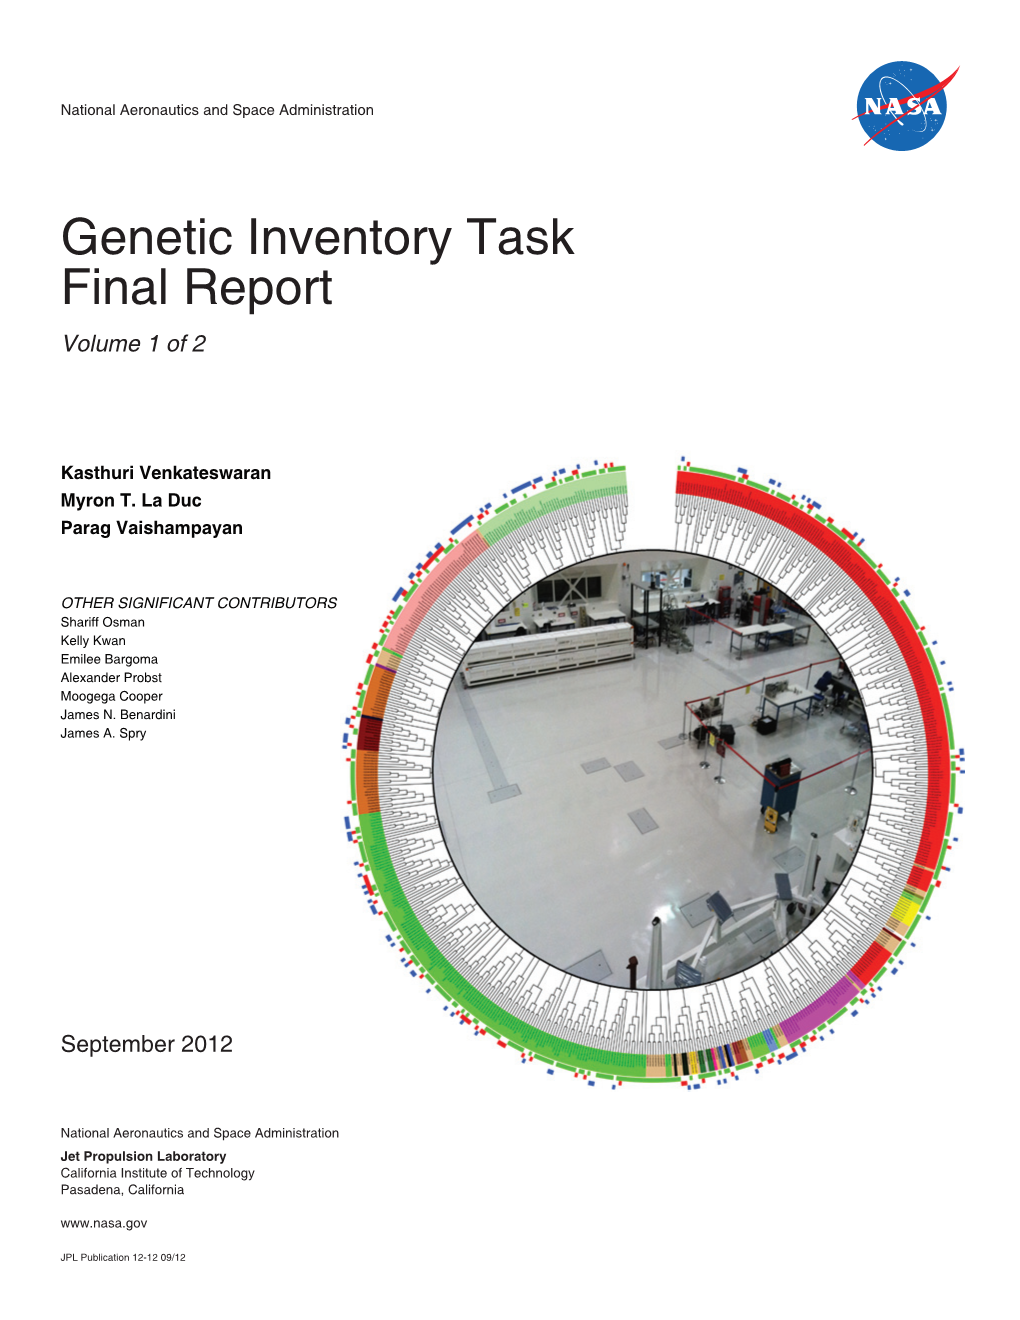 JPL Pub 12-12: Genetic Inventory, Final Report